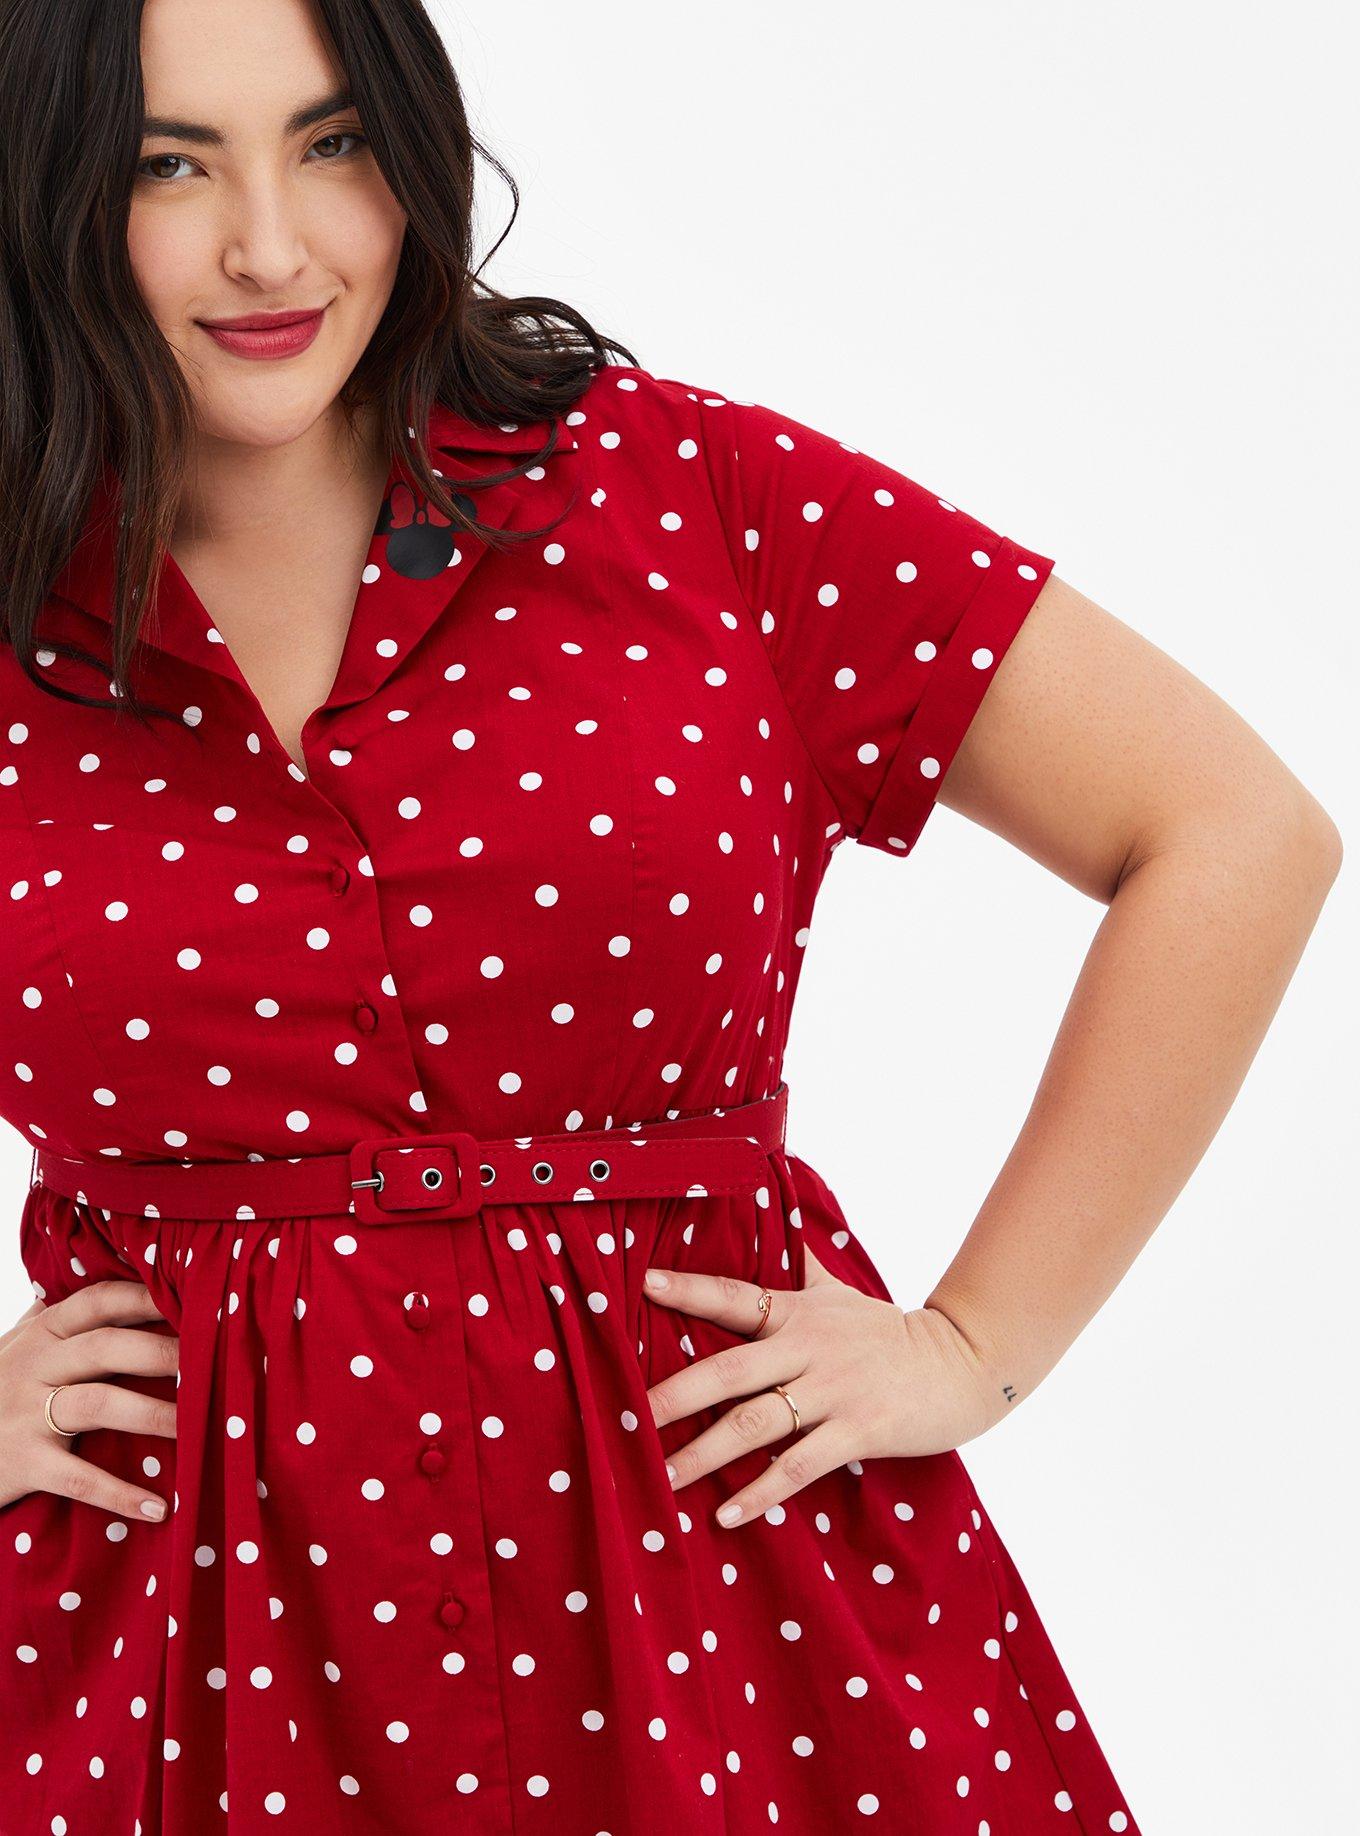 Plus Size - Disney Minnie Mouse Red Polka Dot Retro Swing Dress - Torrid